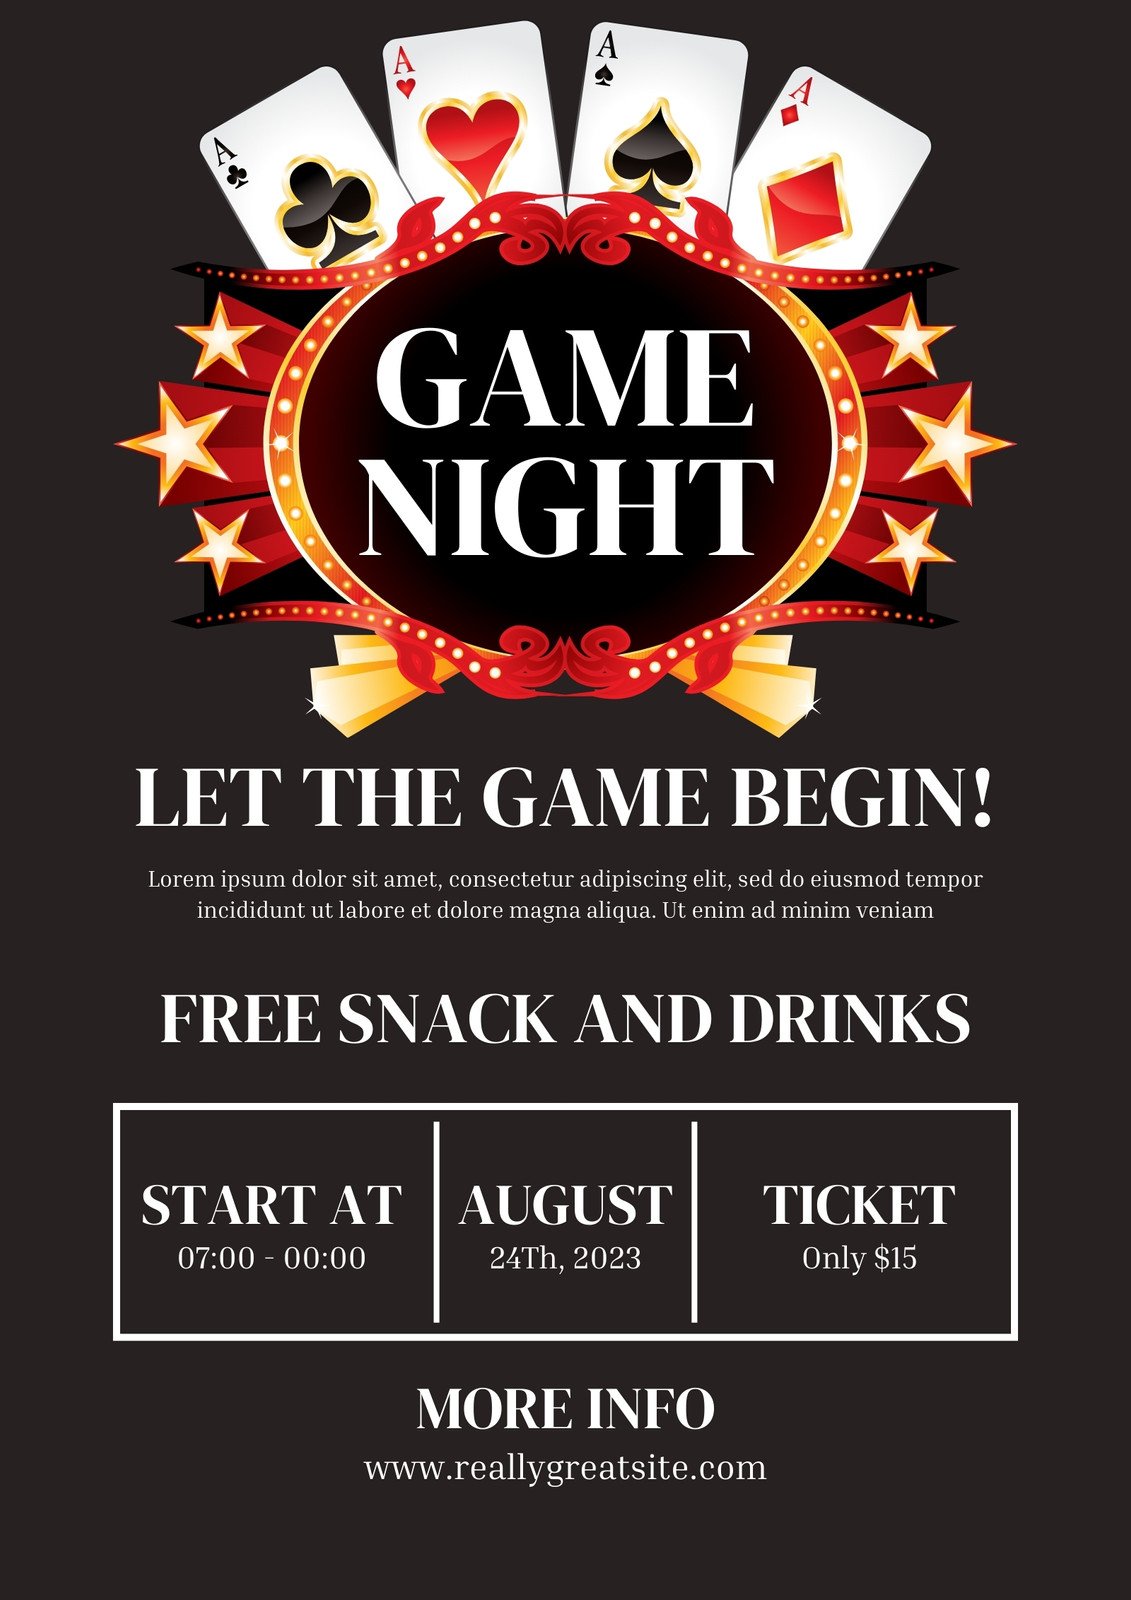 game night flyer background